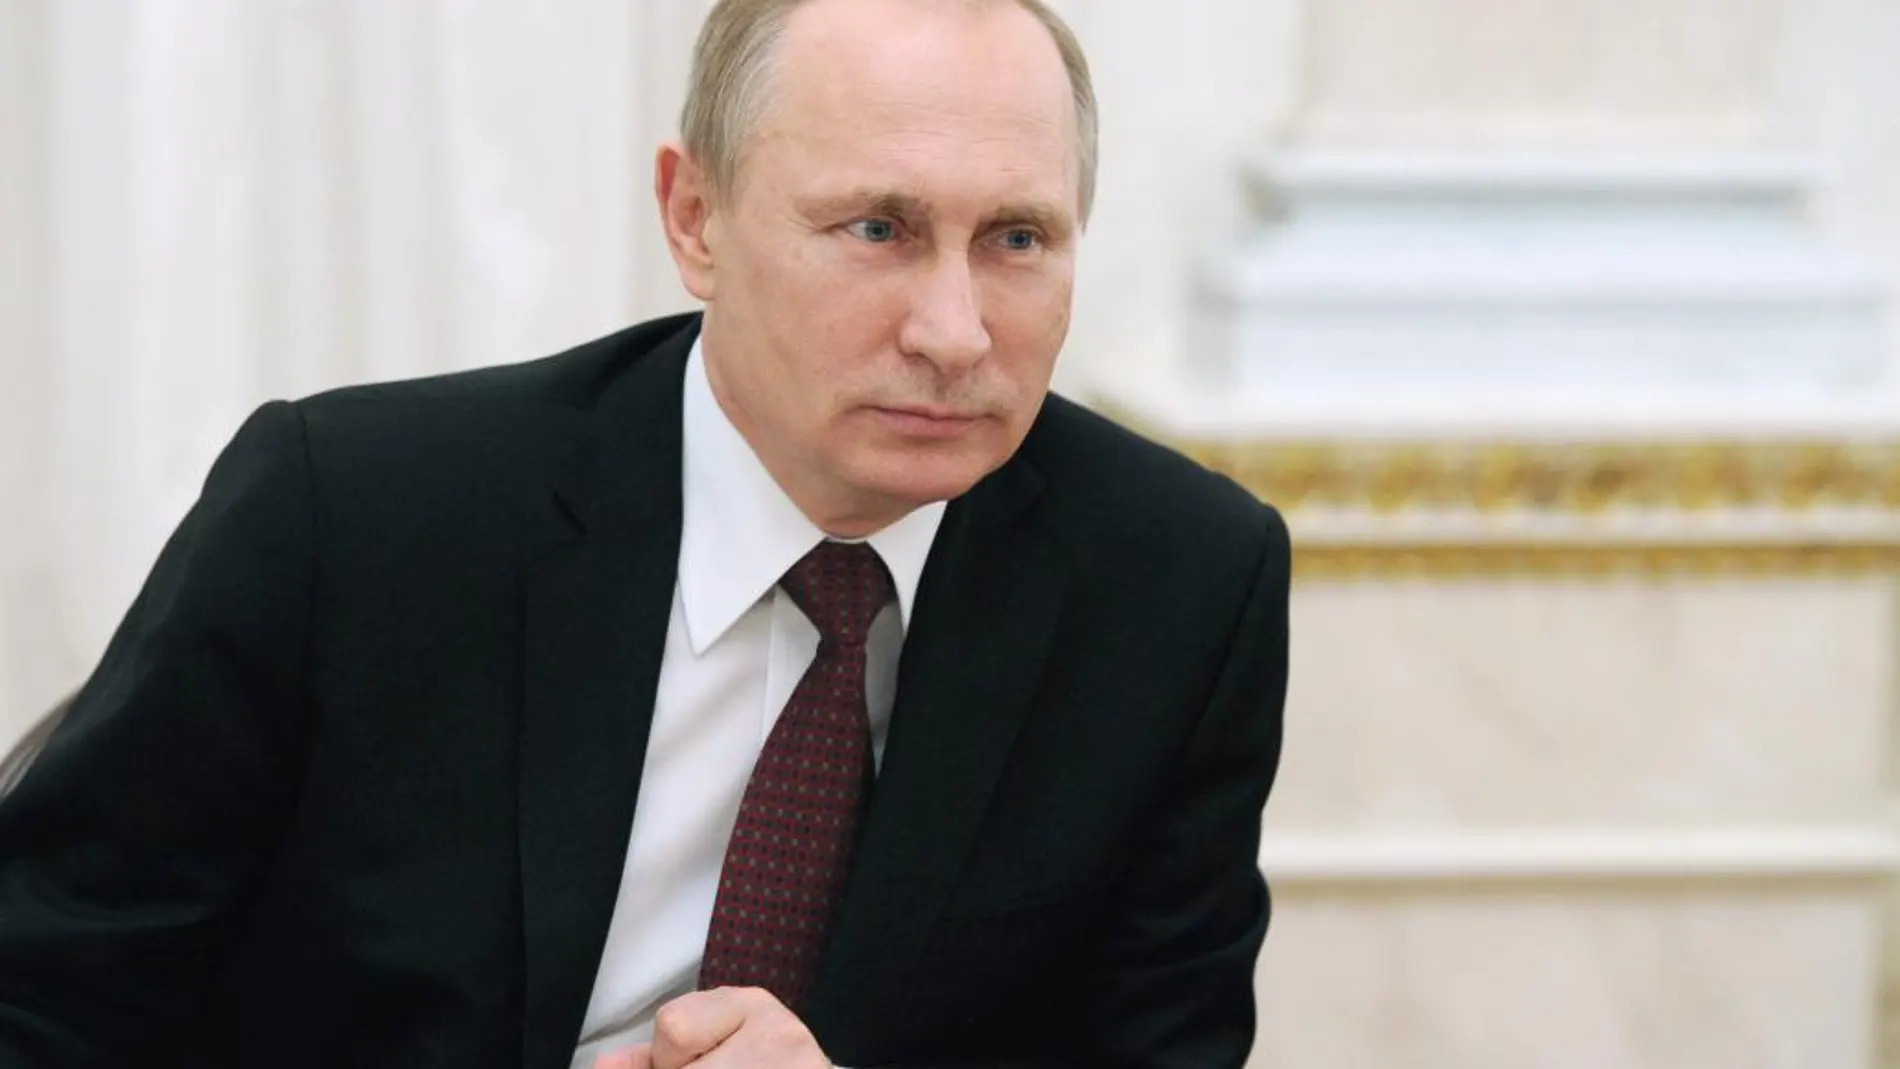 El presidene ruso, Vladimir Putin.